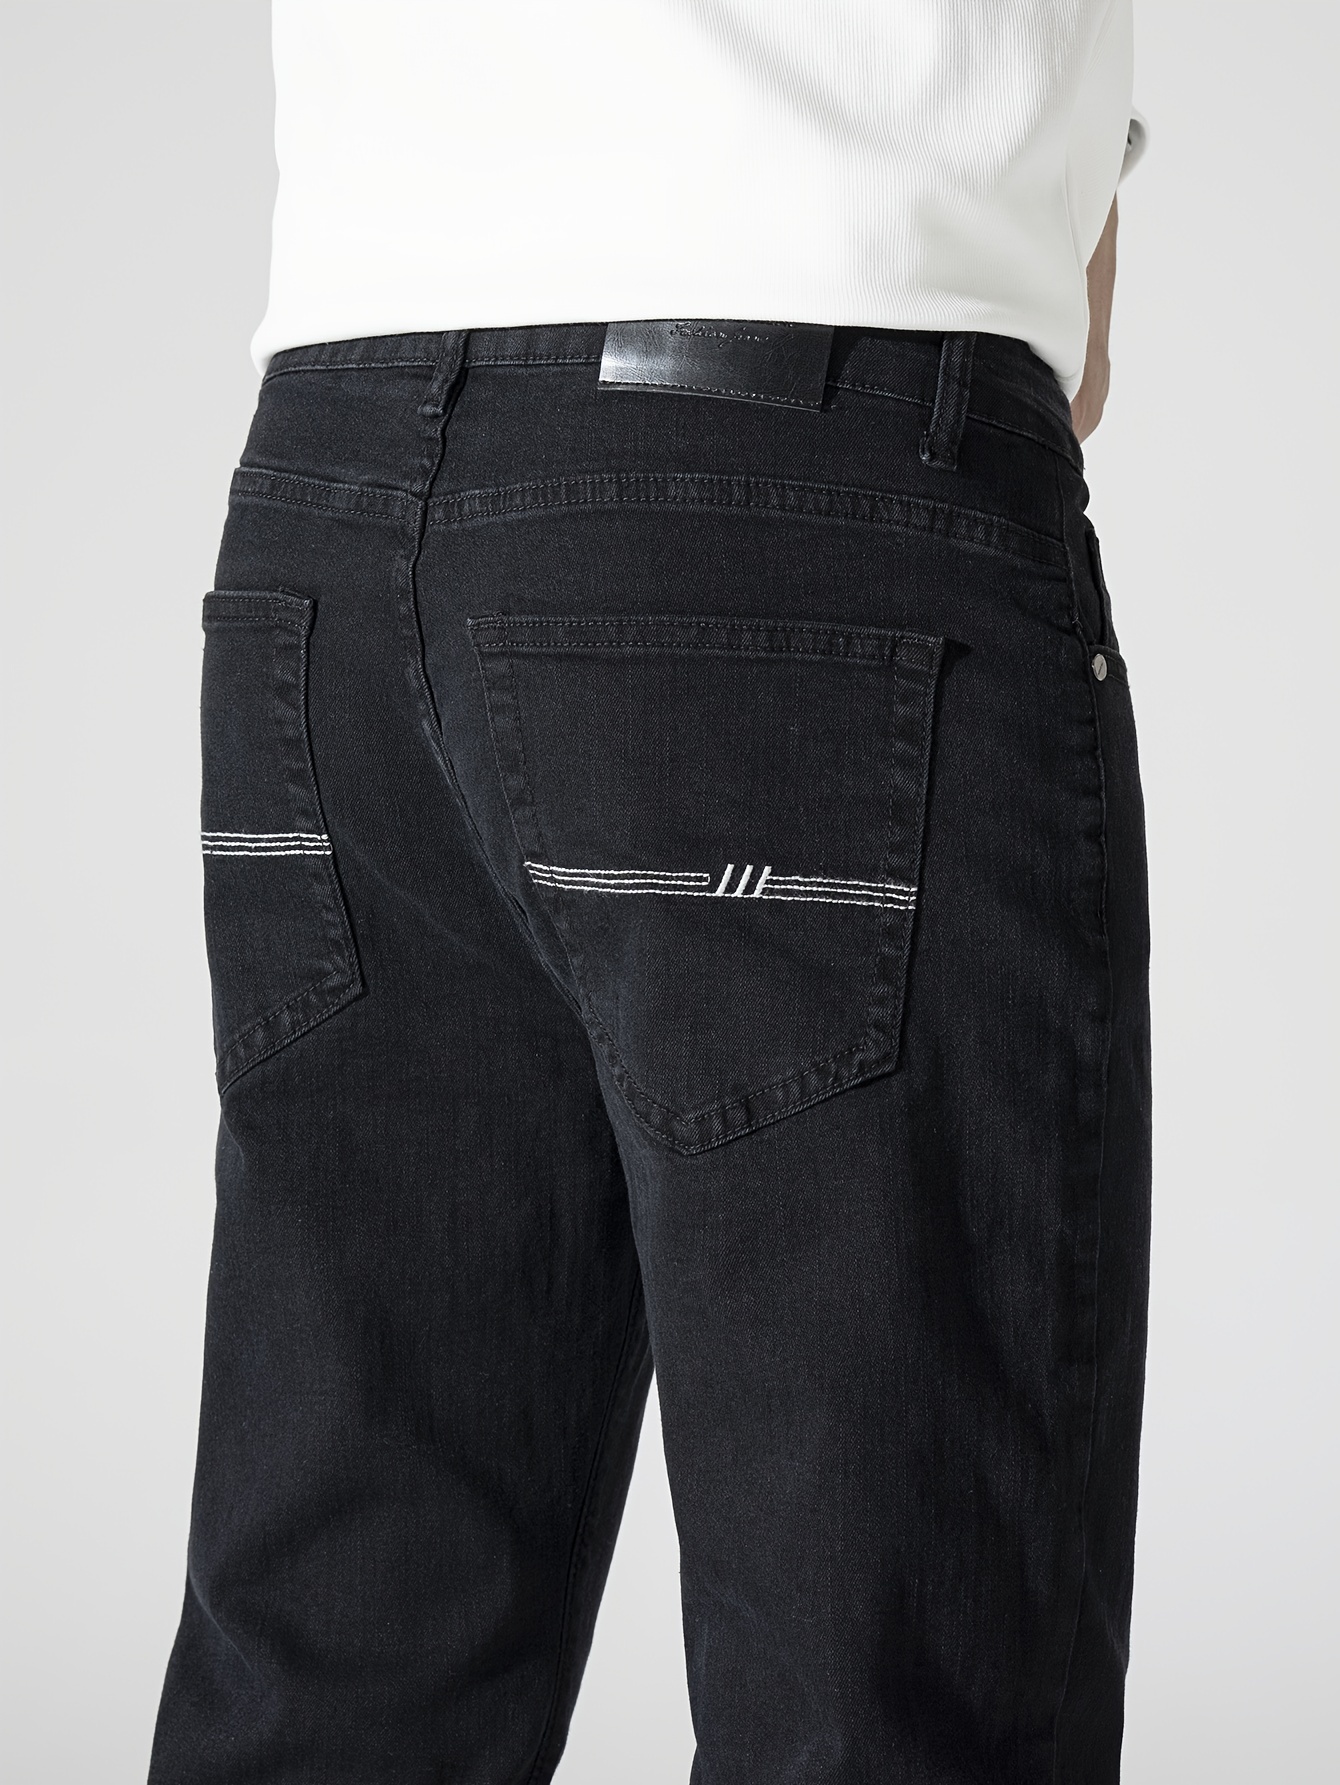 XIULAIQ New Hombres Moda Jeans Business Casual Estiramiento Slim